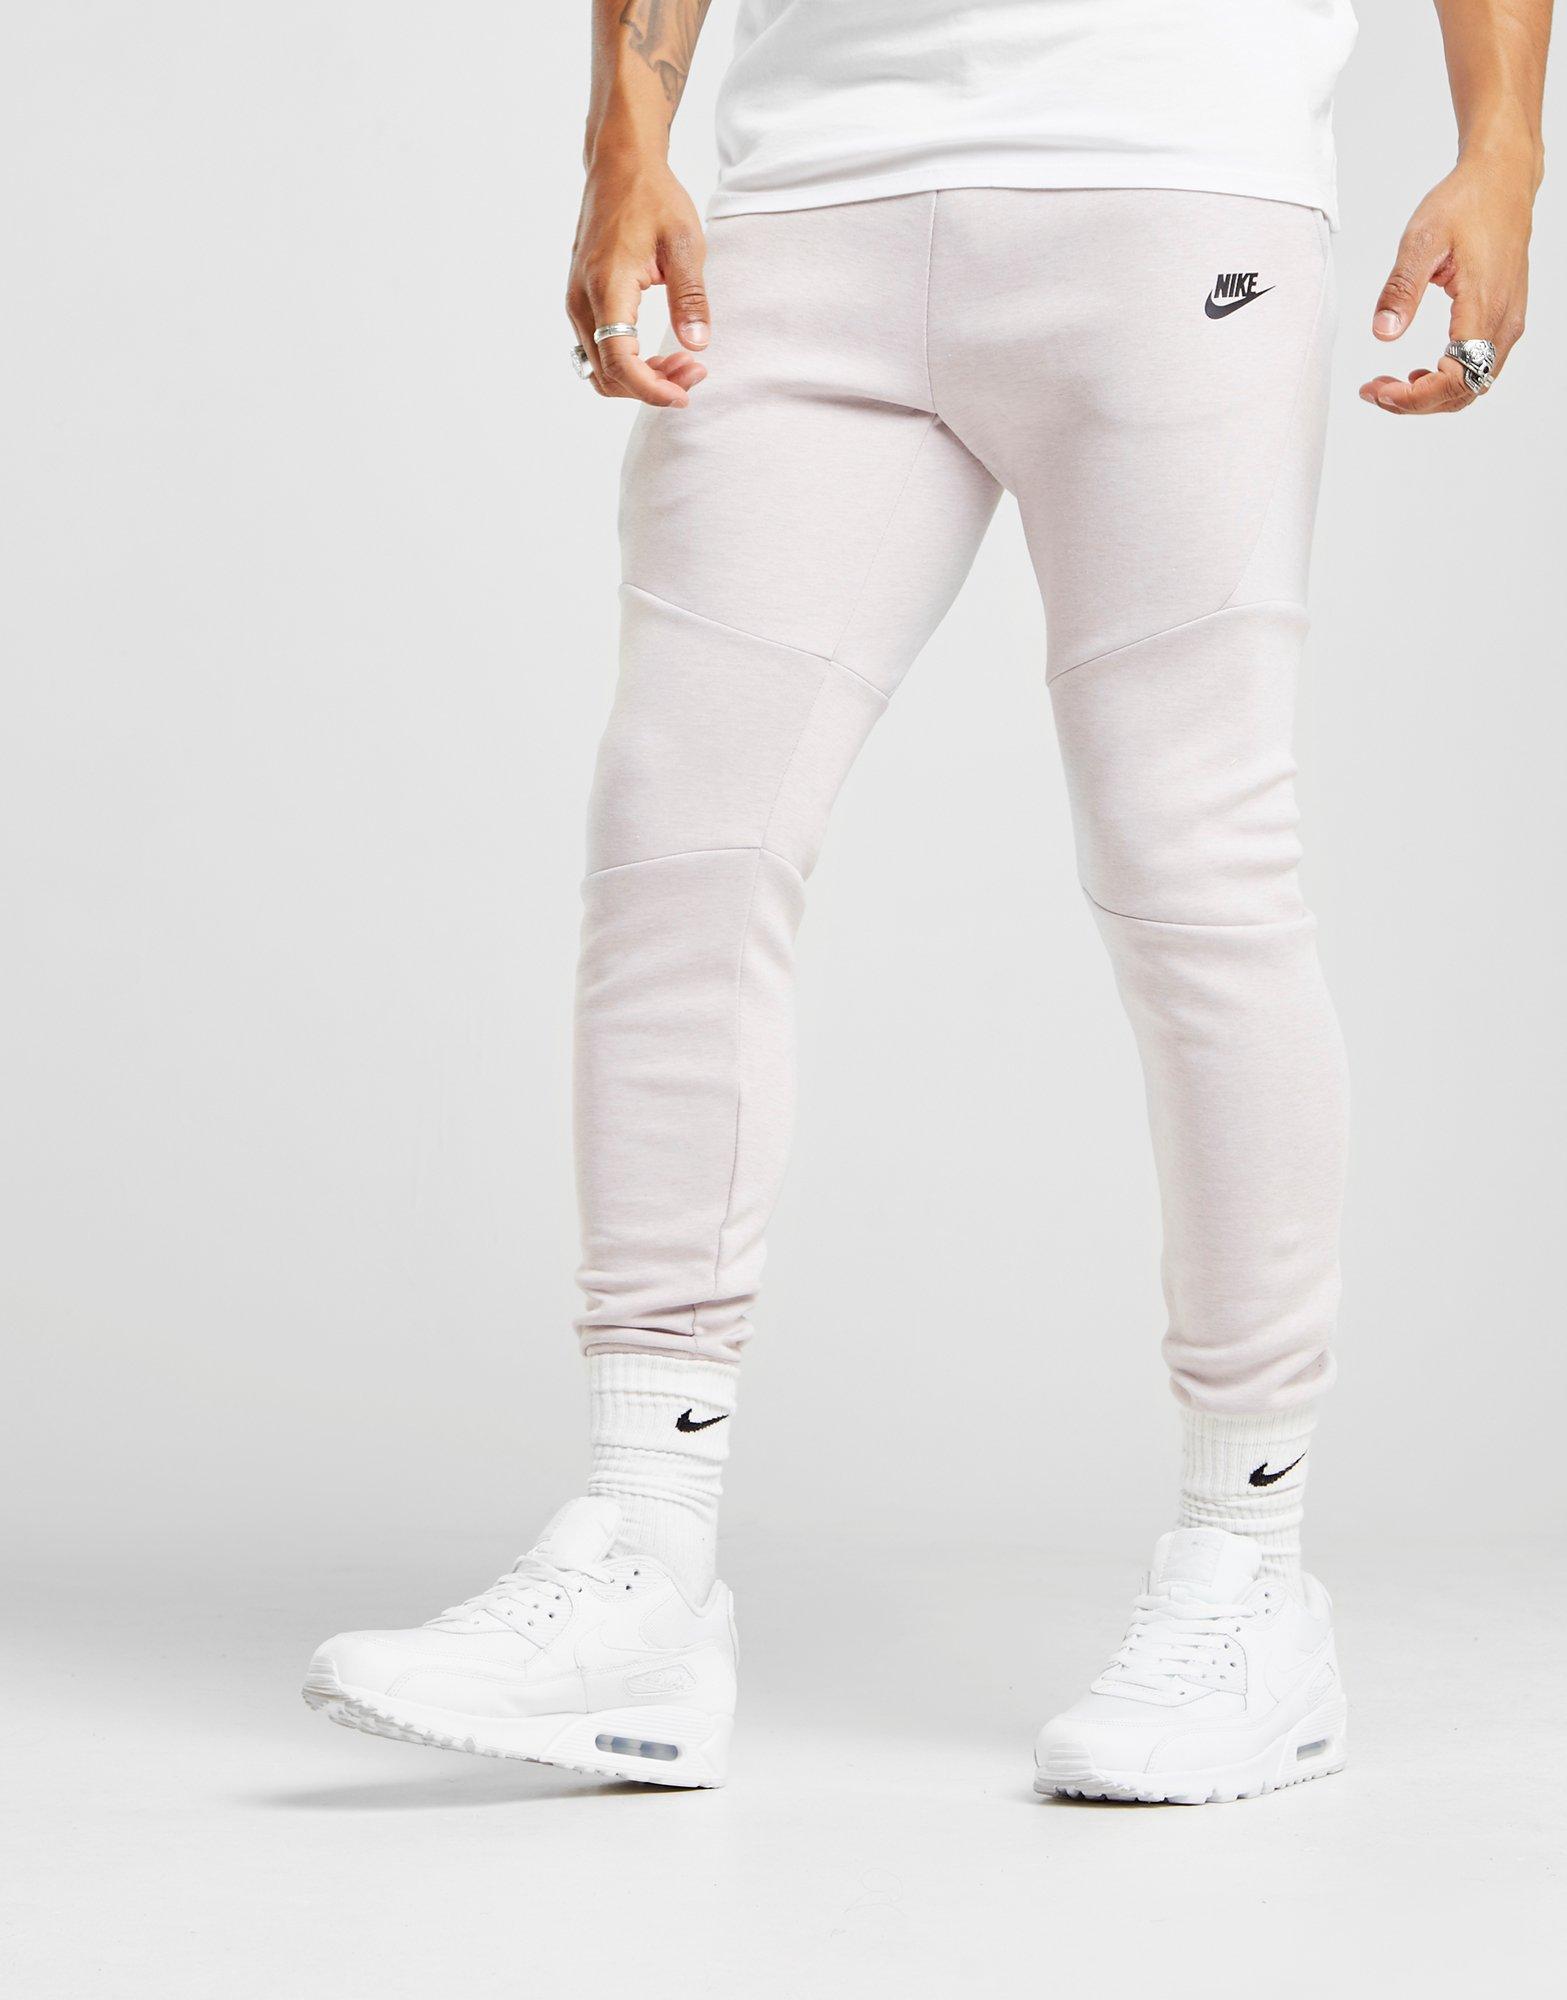 nike tech fleece pants white and grey